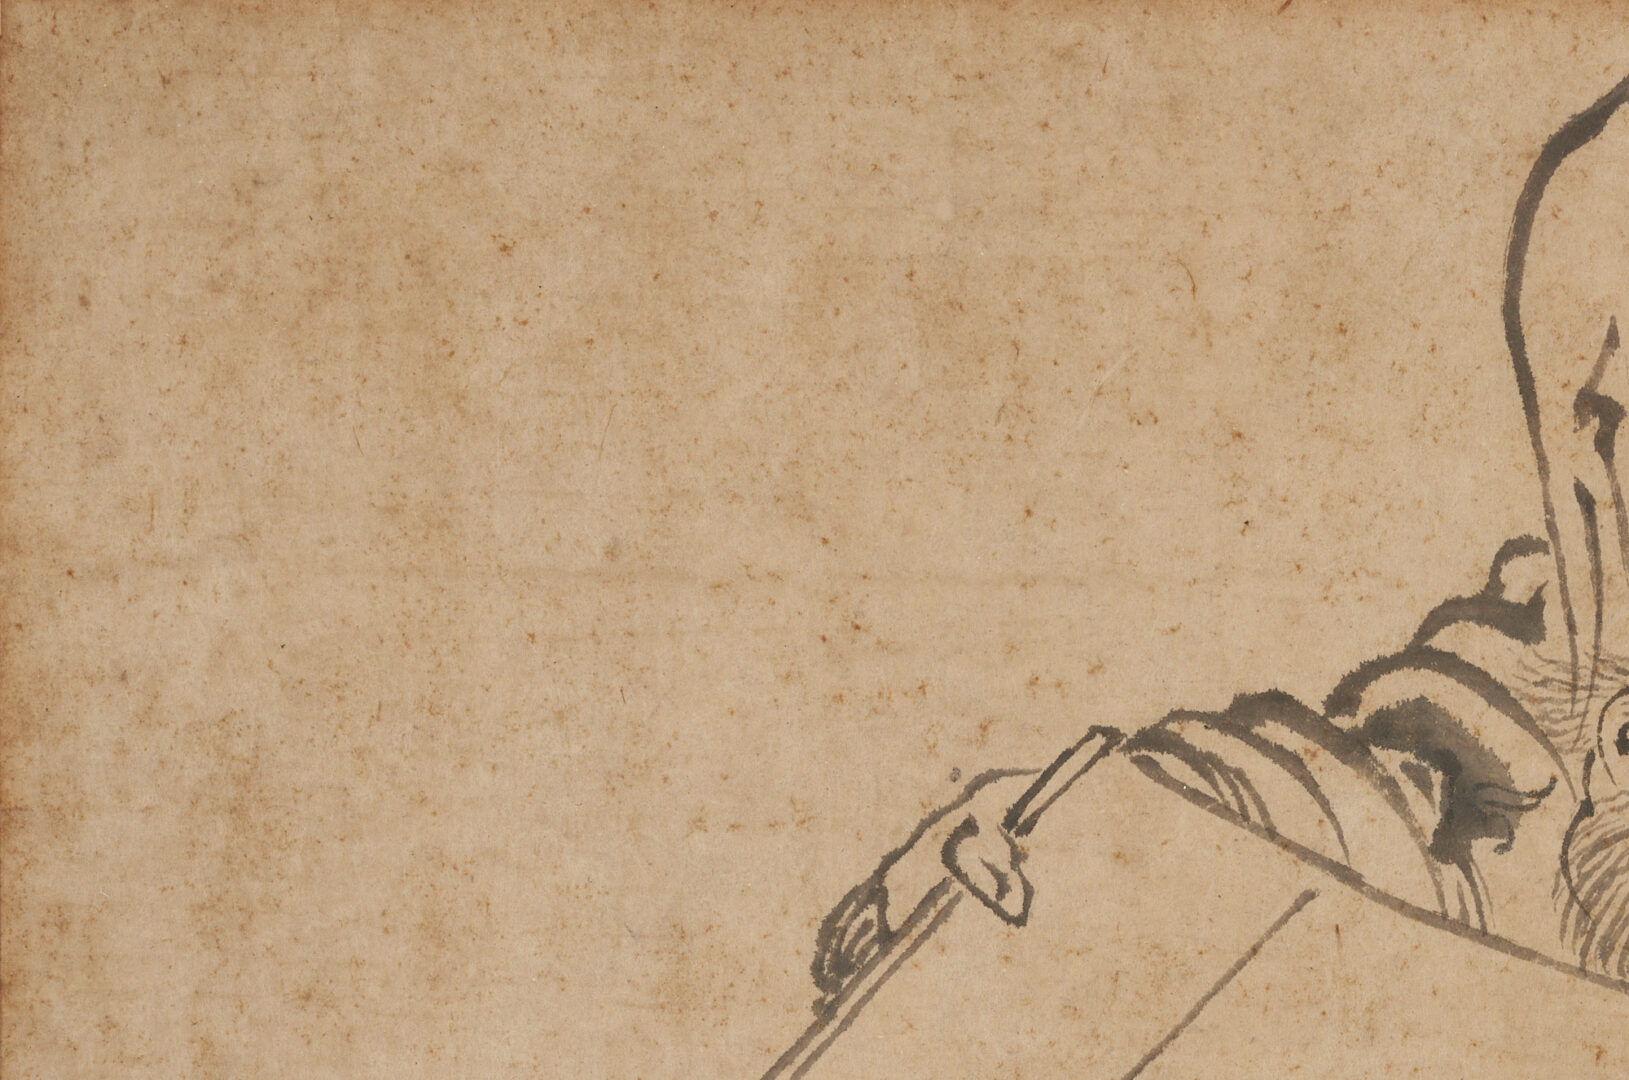 Lot 16: Drawing of Jurolin attr. Hokusai, ex-Ernest Fenollosa